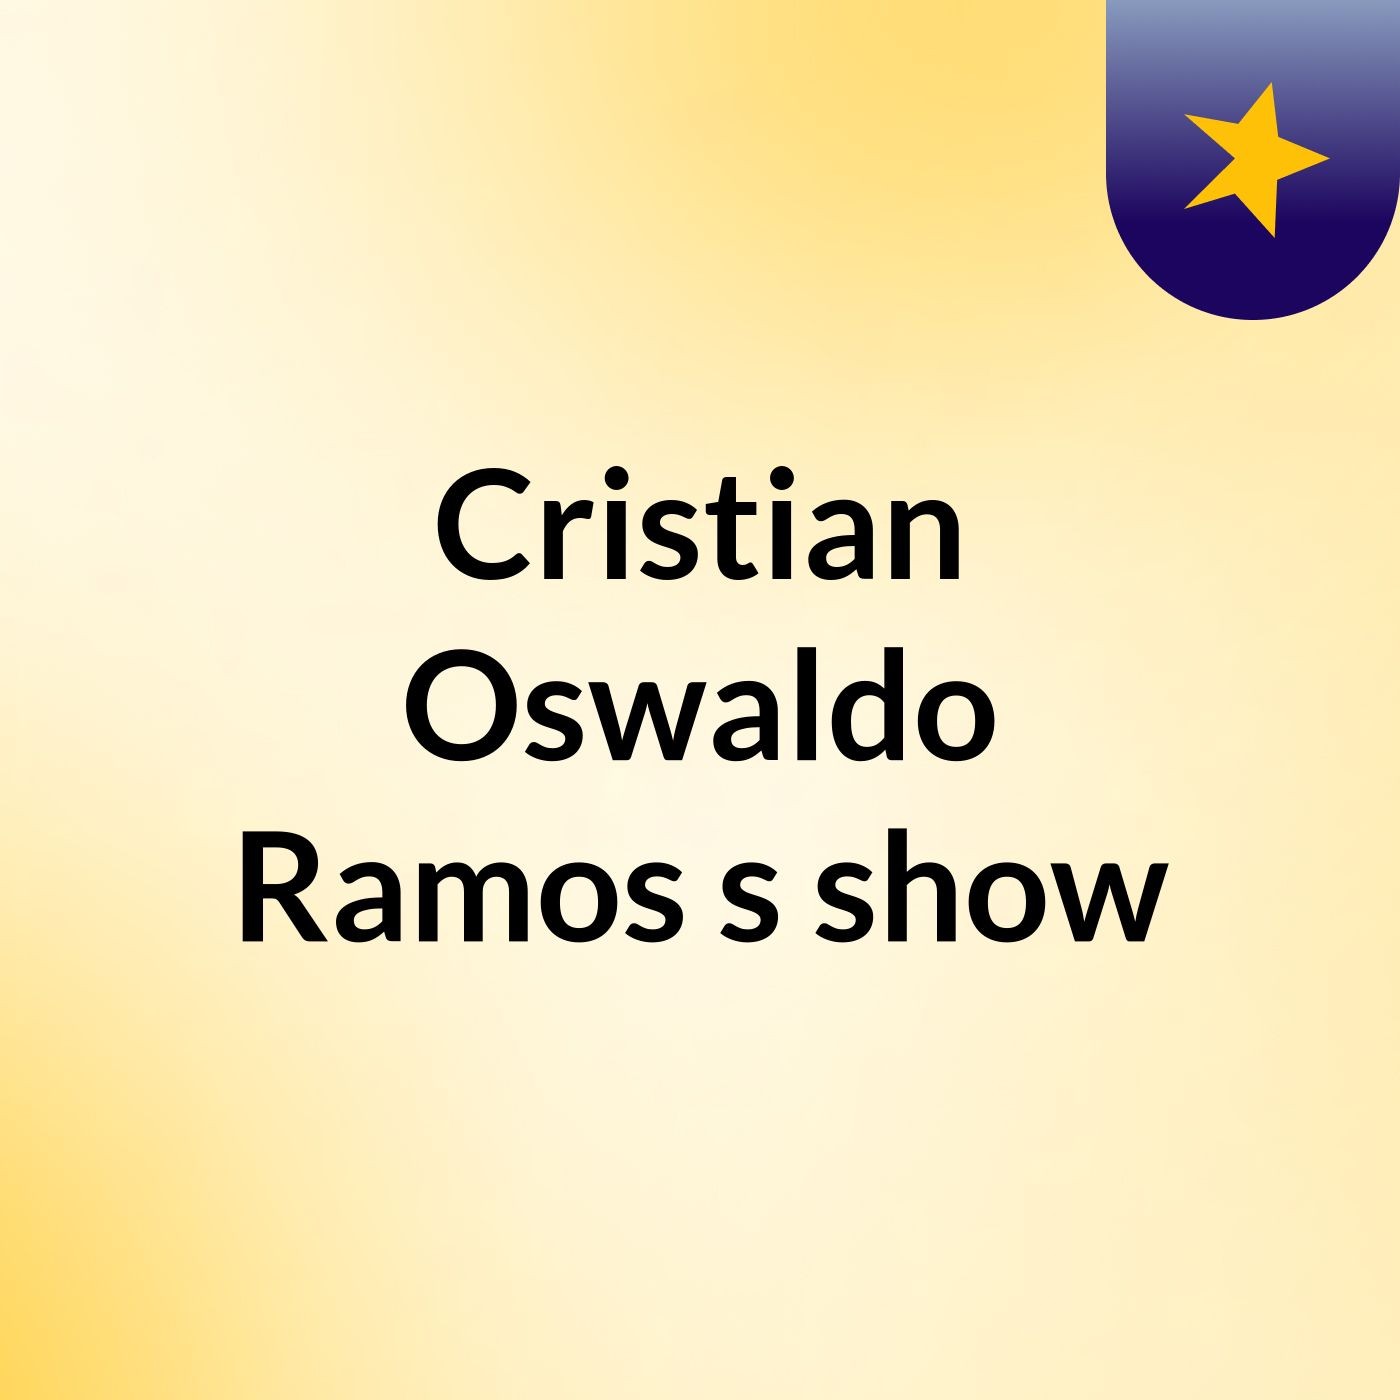 Cristian Oswaldo Ramos's show